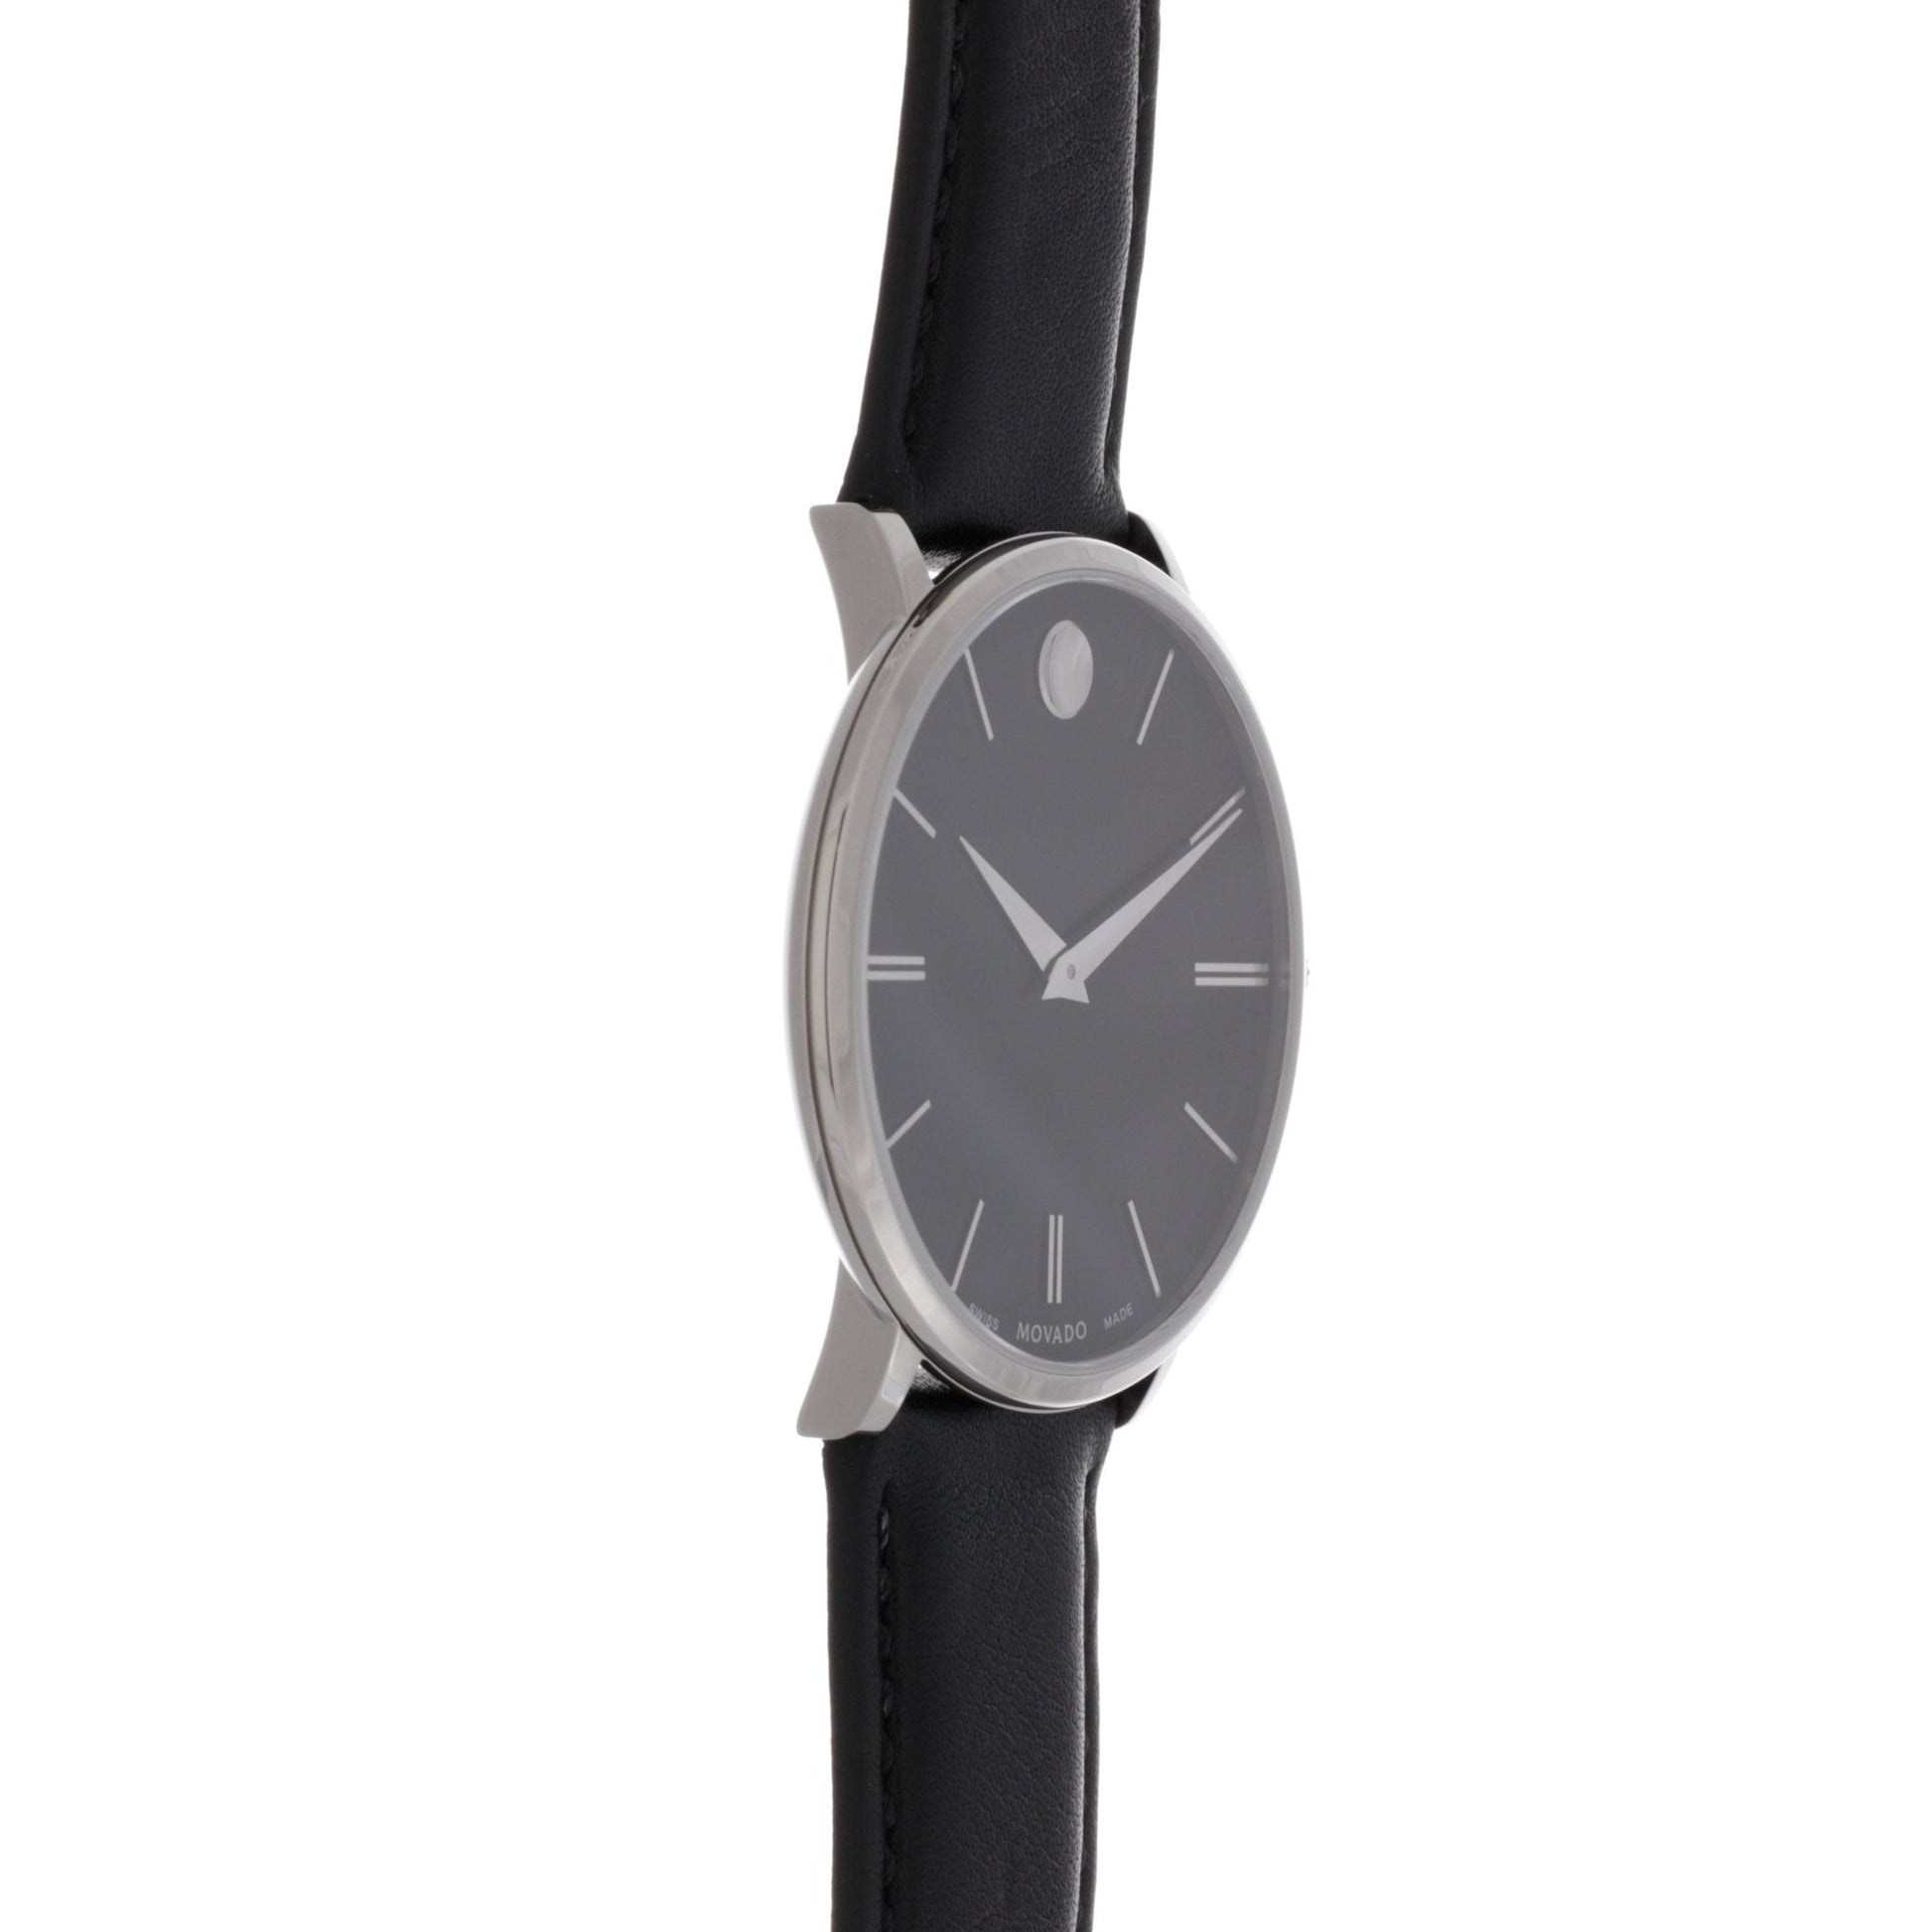 Movado Ultra Slim Black Dial Black Leather Strap Watch For Women - 0607094